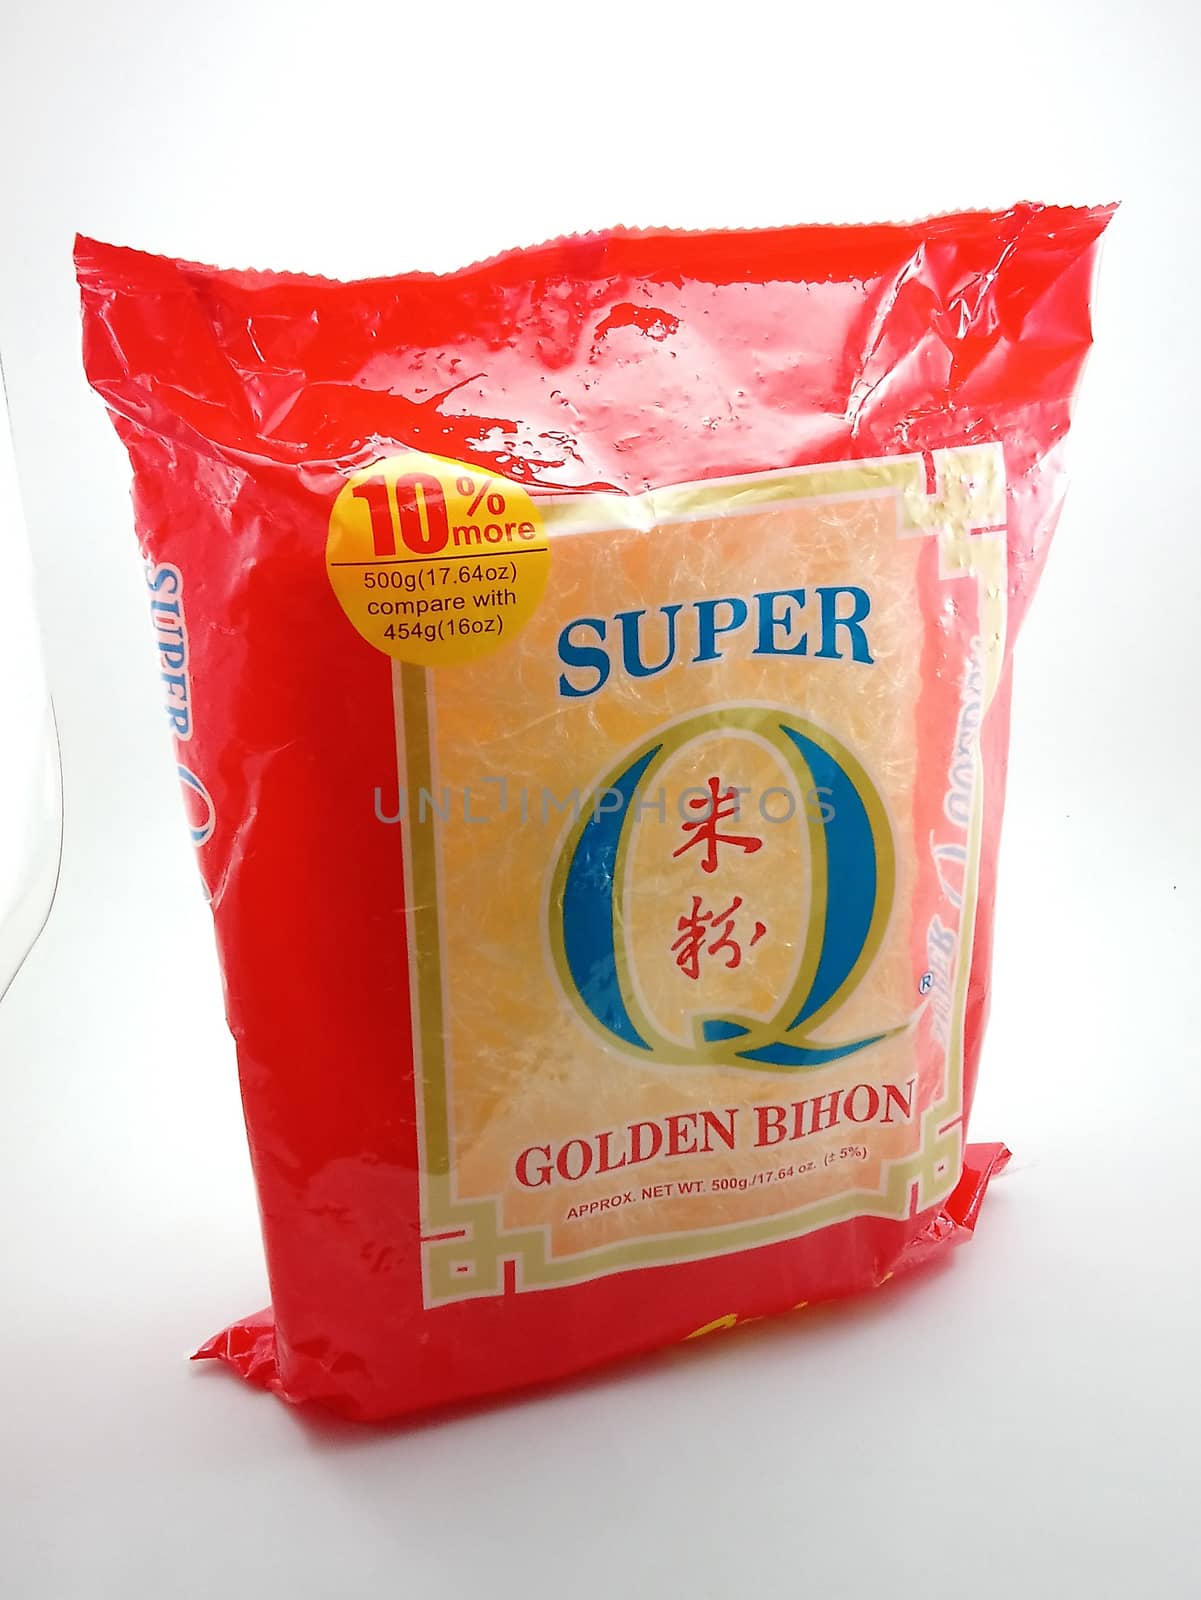 Super q golden bihon in Manila, Philippines by imwaltersy